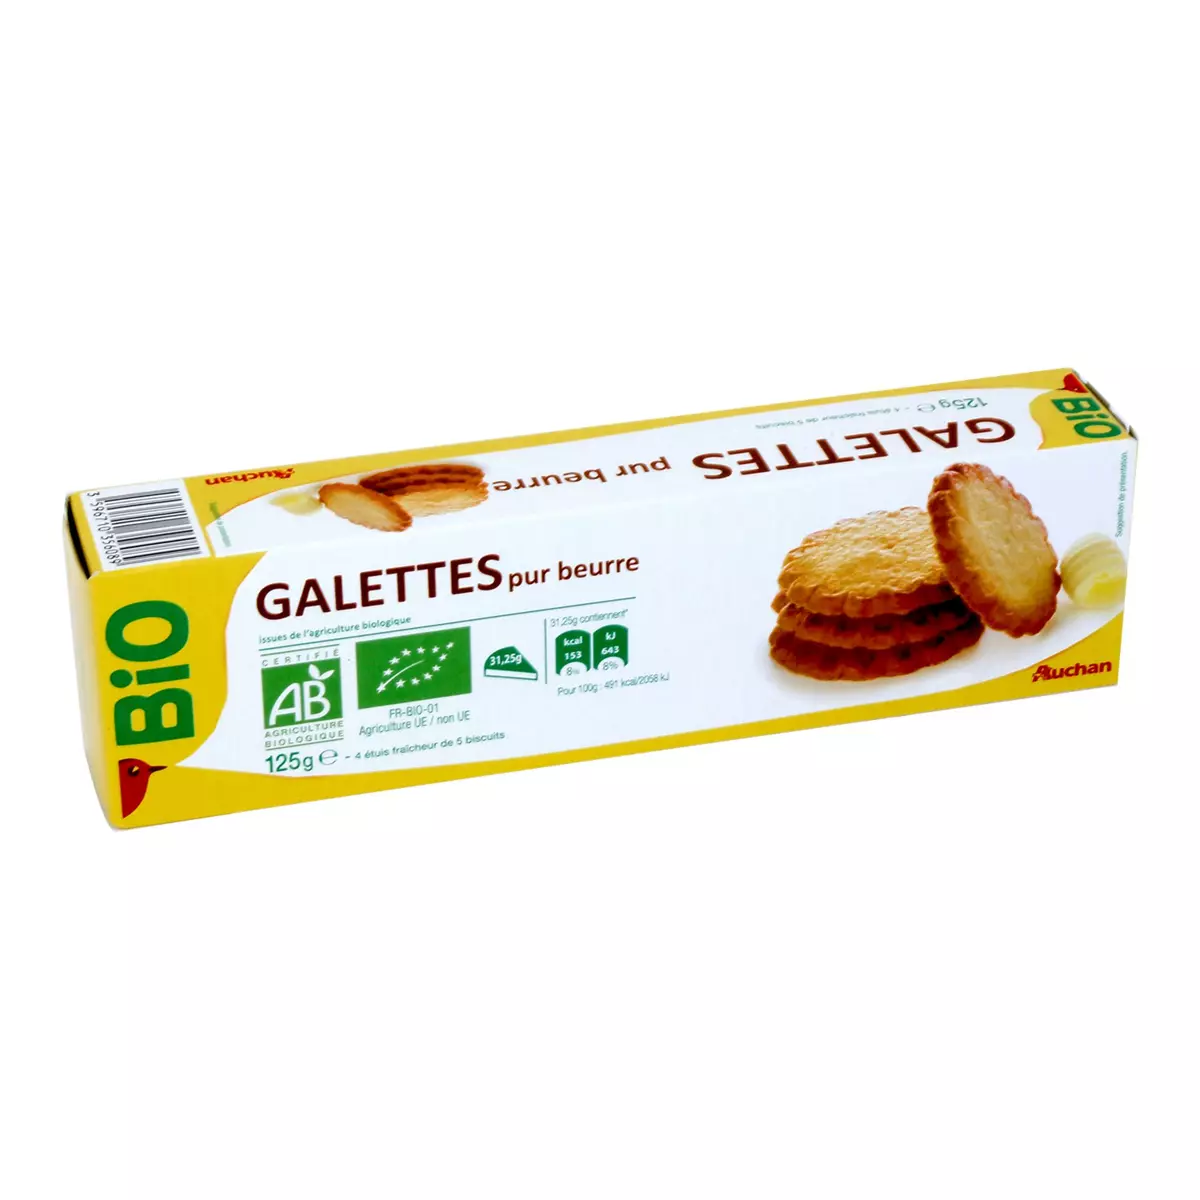 AUCHAN BIO Galettes pur beurre 20 biscuits 125g